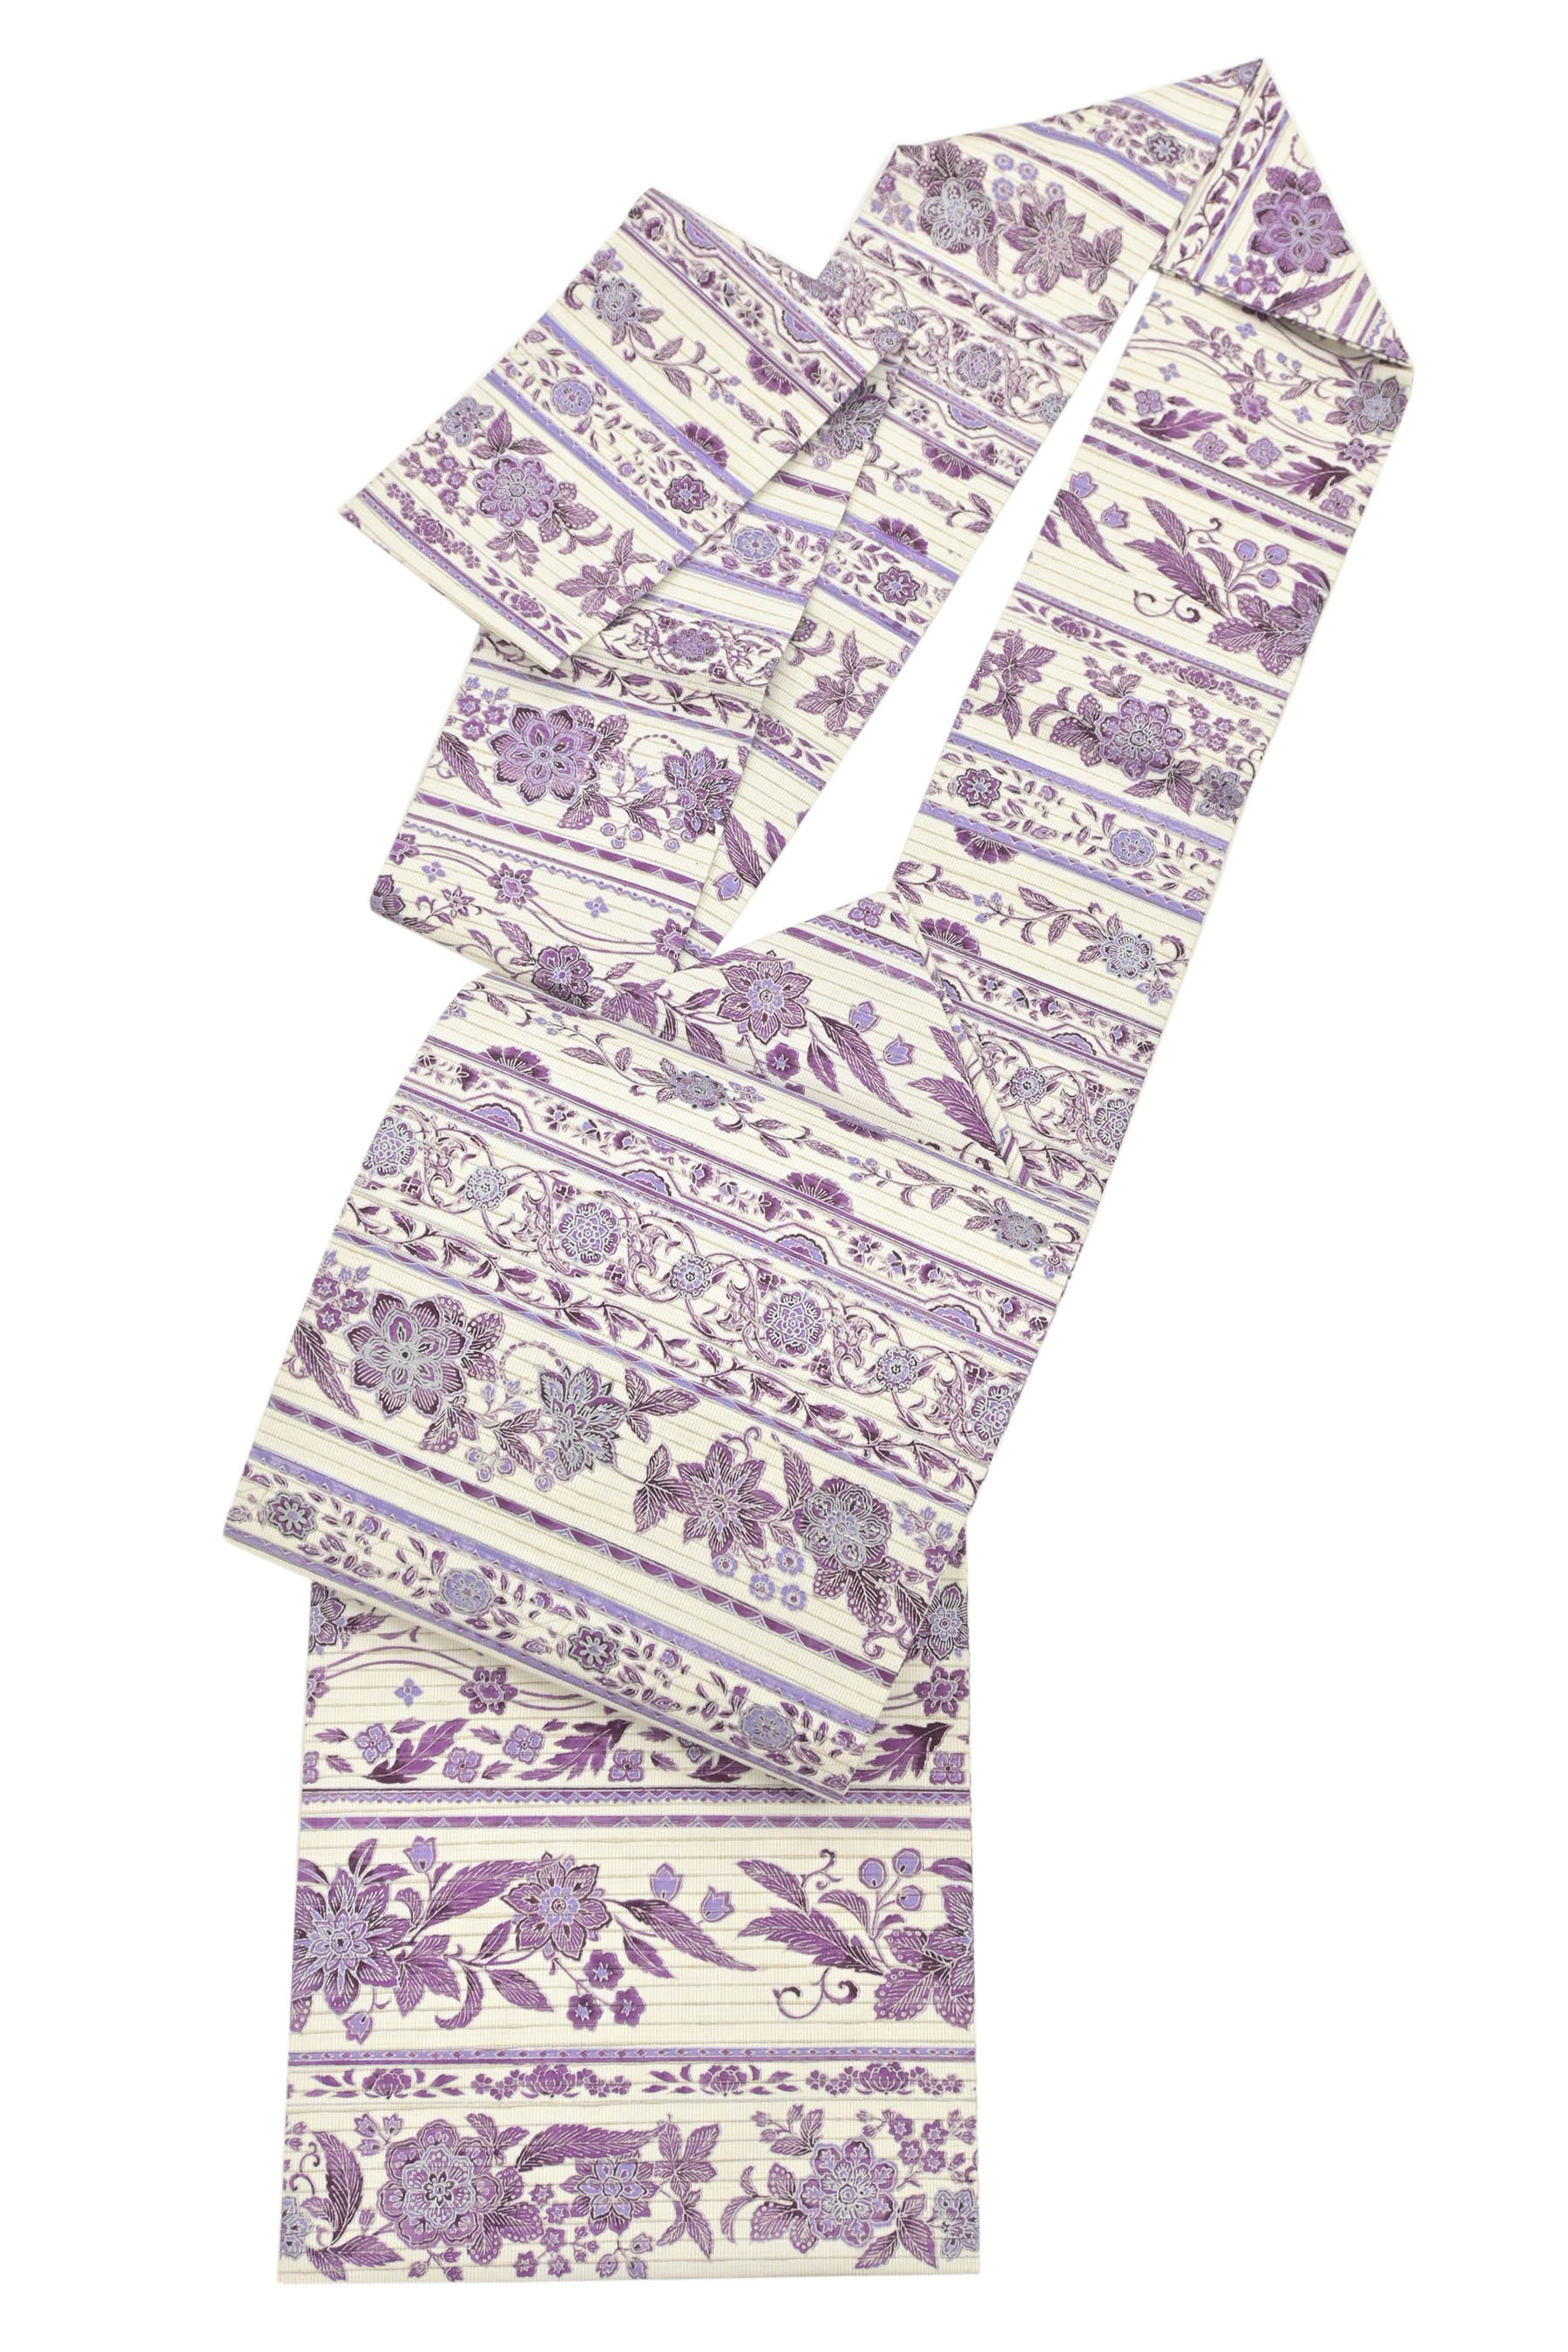 華道お仕立付済 本場縞大島染め九寸名古屋帯 大島紬 証紙あり 白×紫 